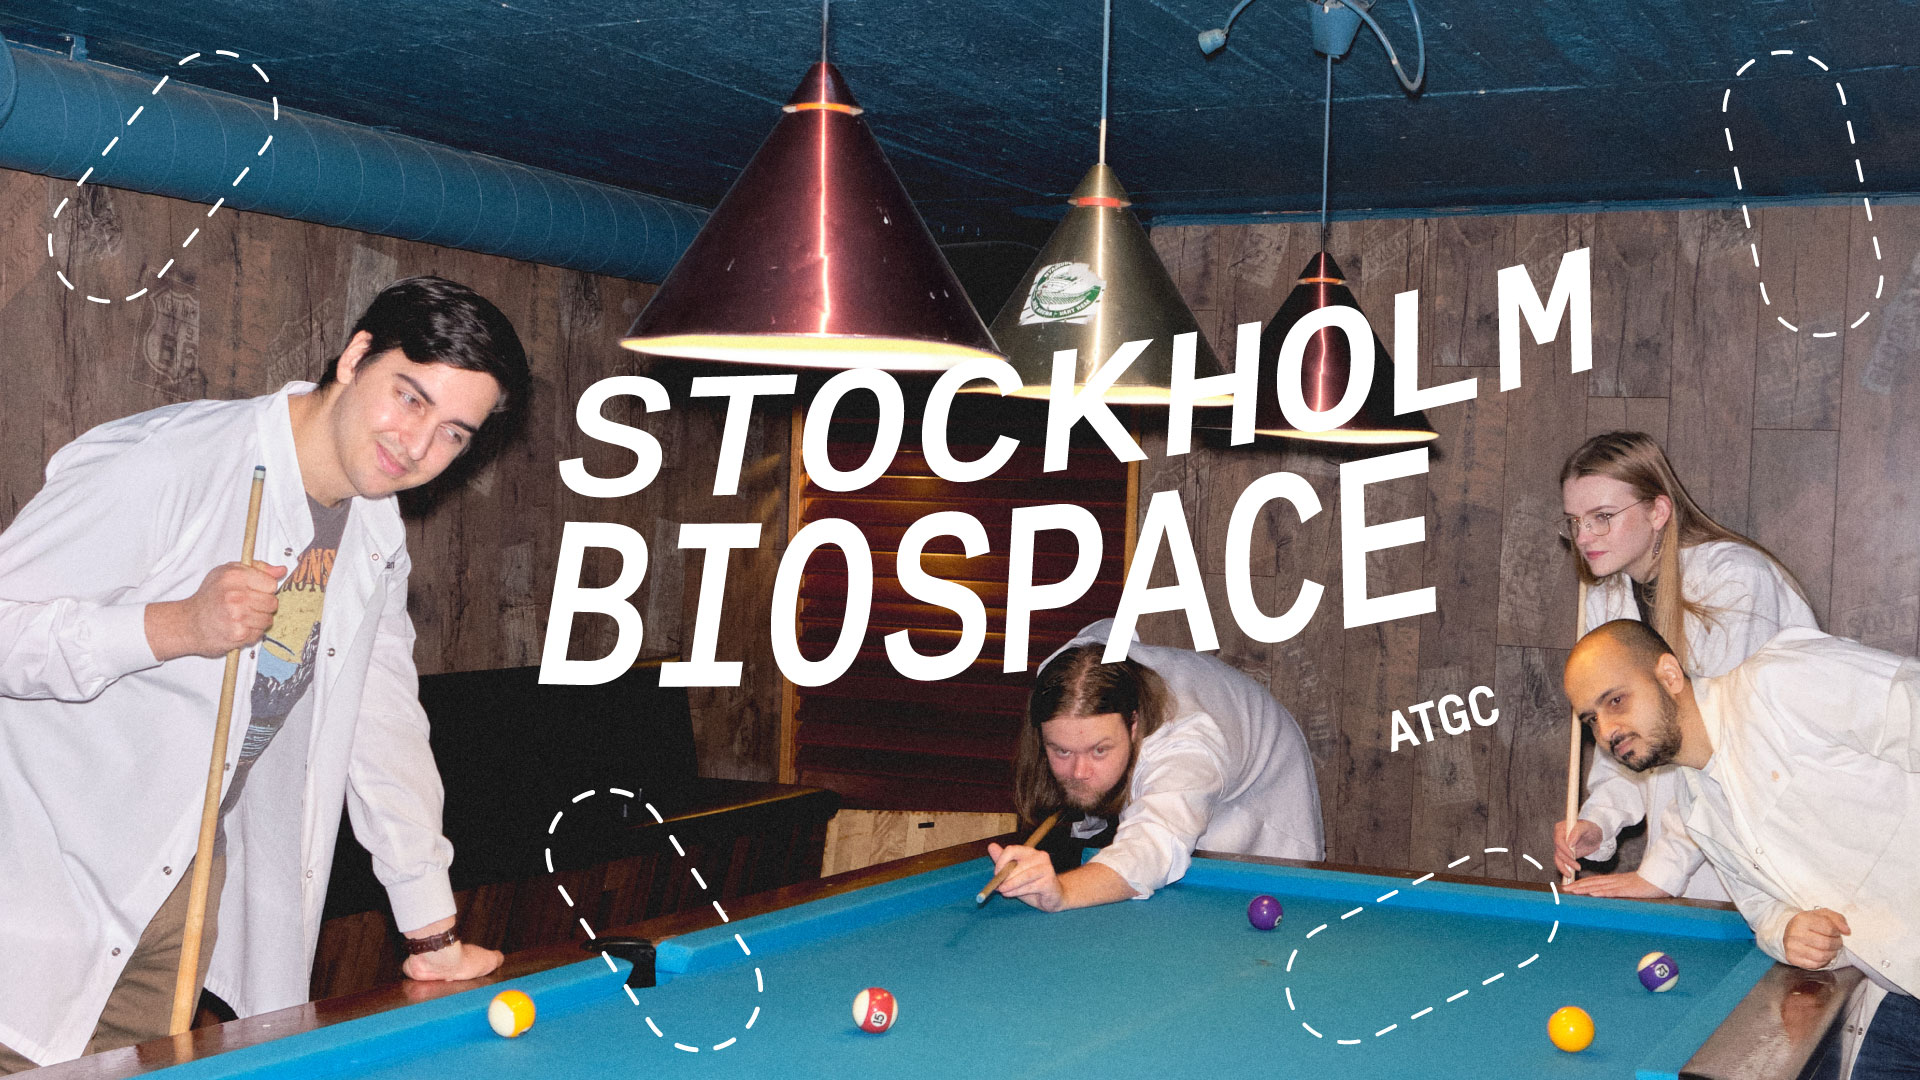 Stockholm Biospace